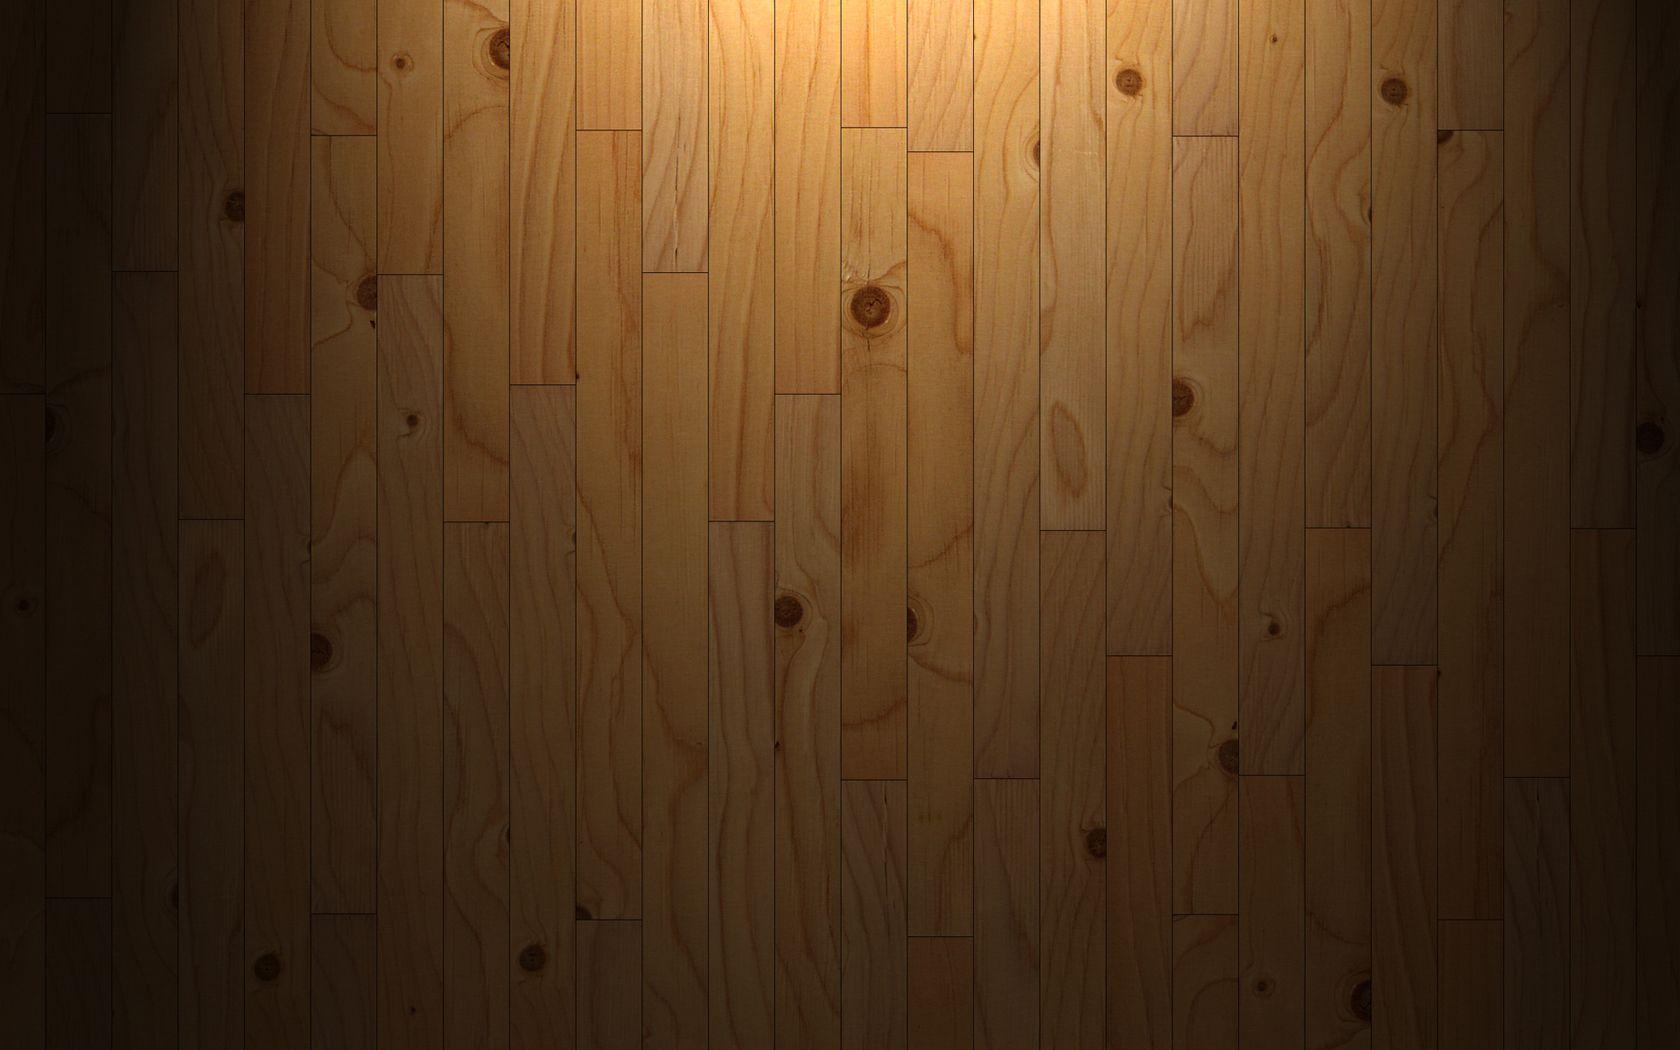 Download the Smooth Wood Floor Wallpaper, Smooth Wood Floor iPhone